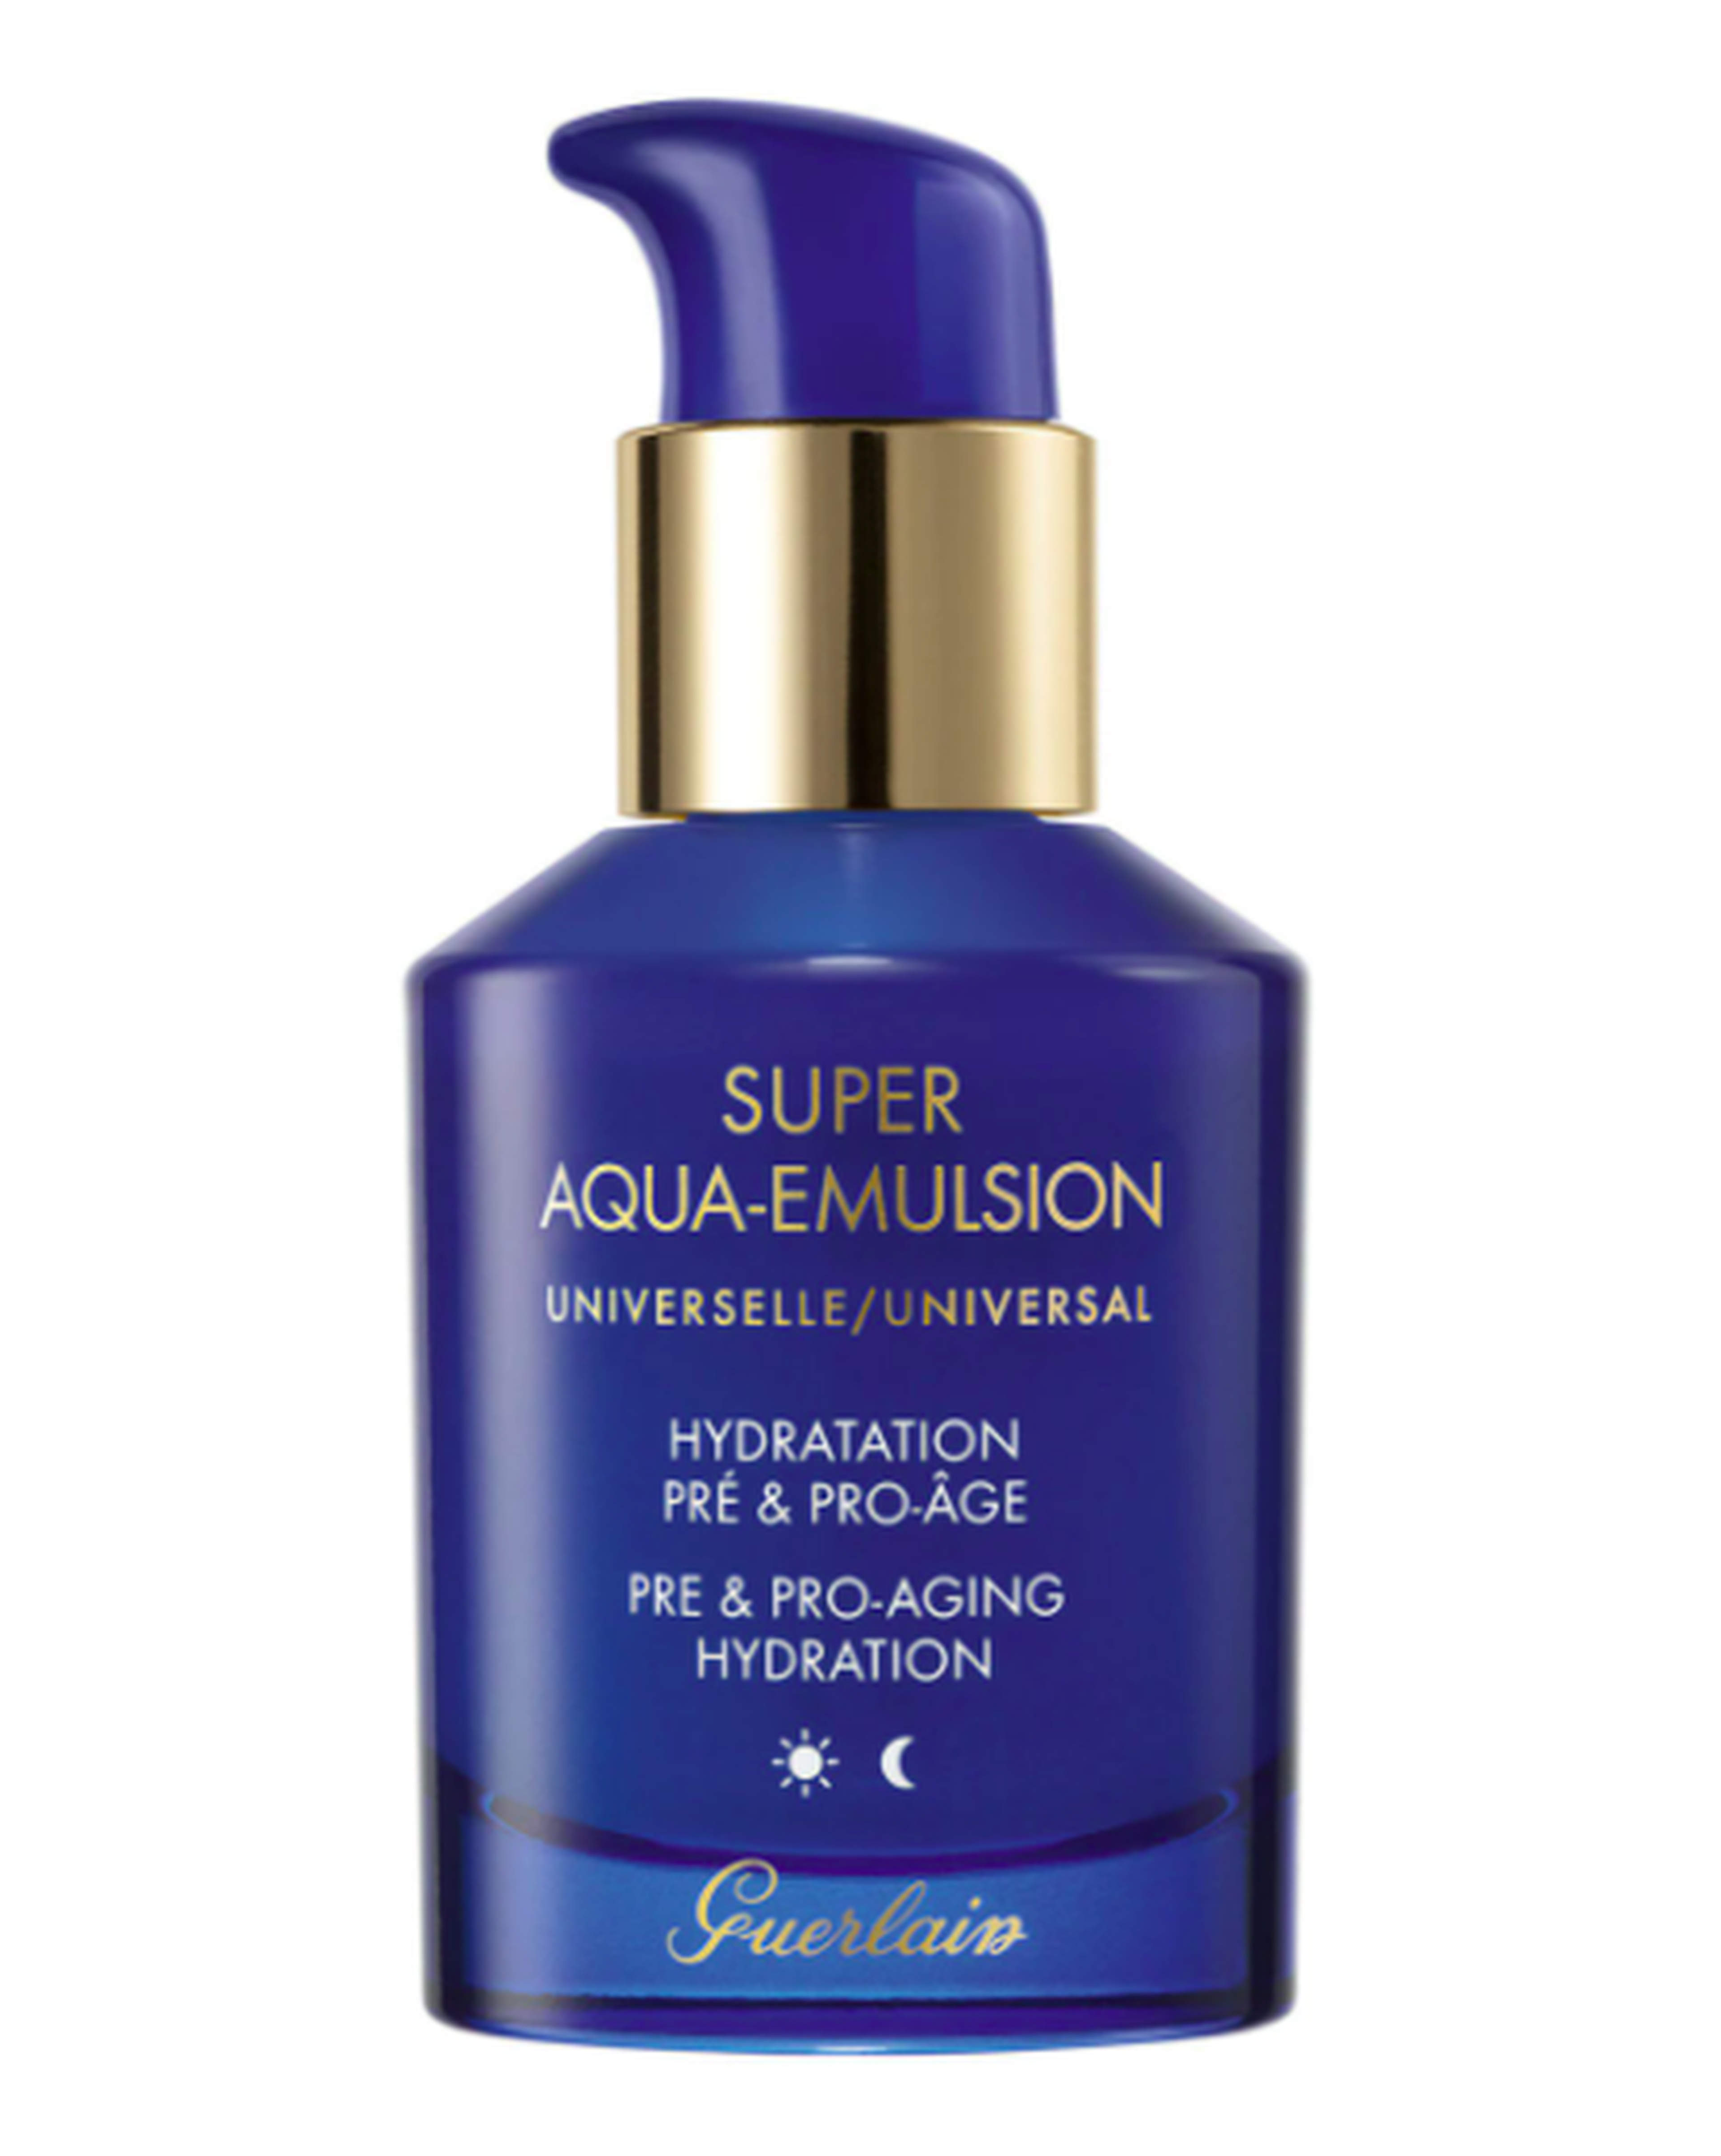 Super Aqua-emulsion, Guerlain.